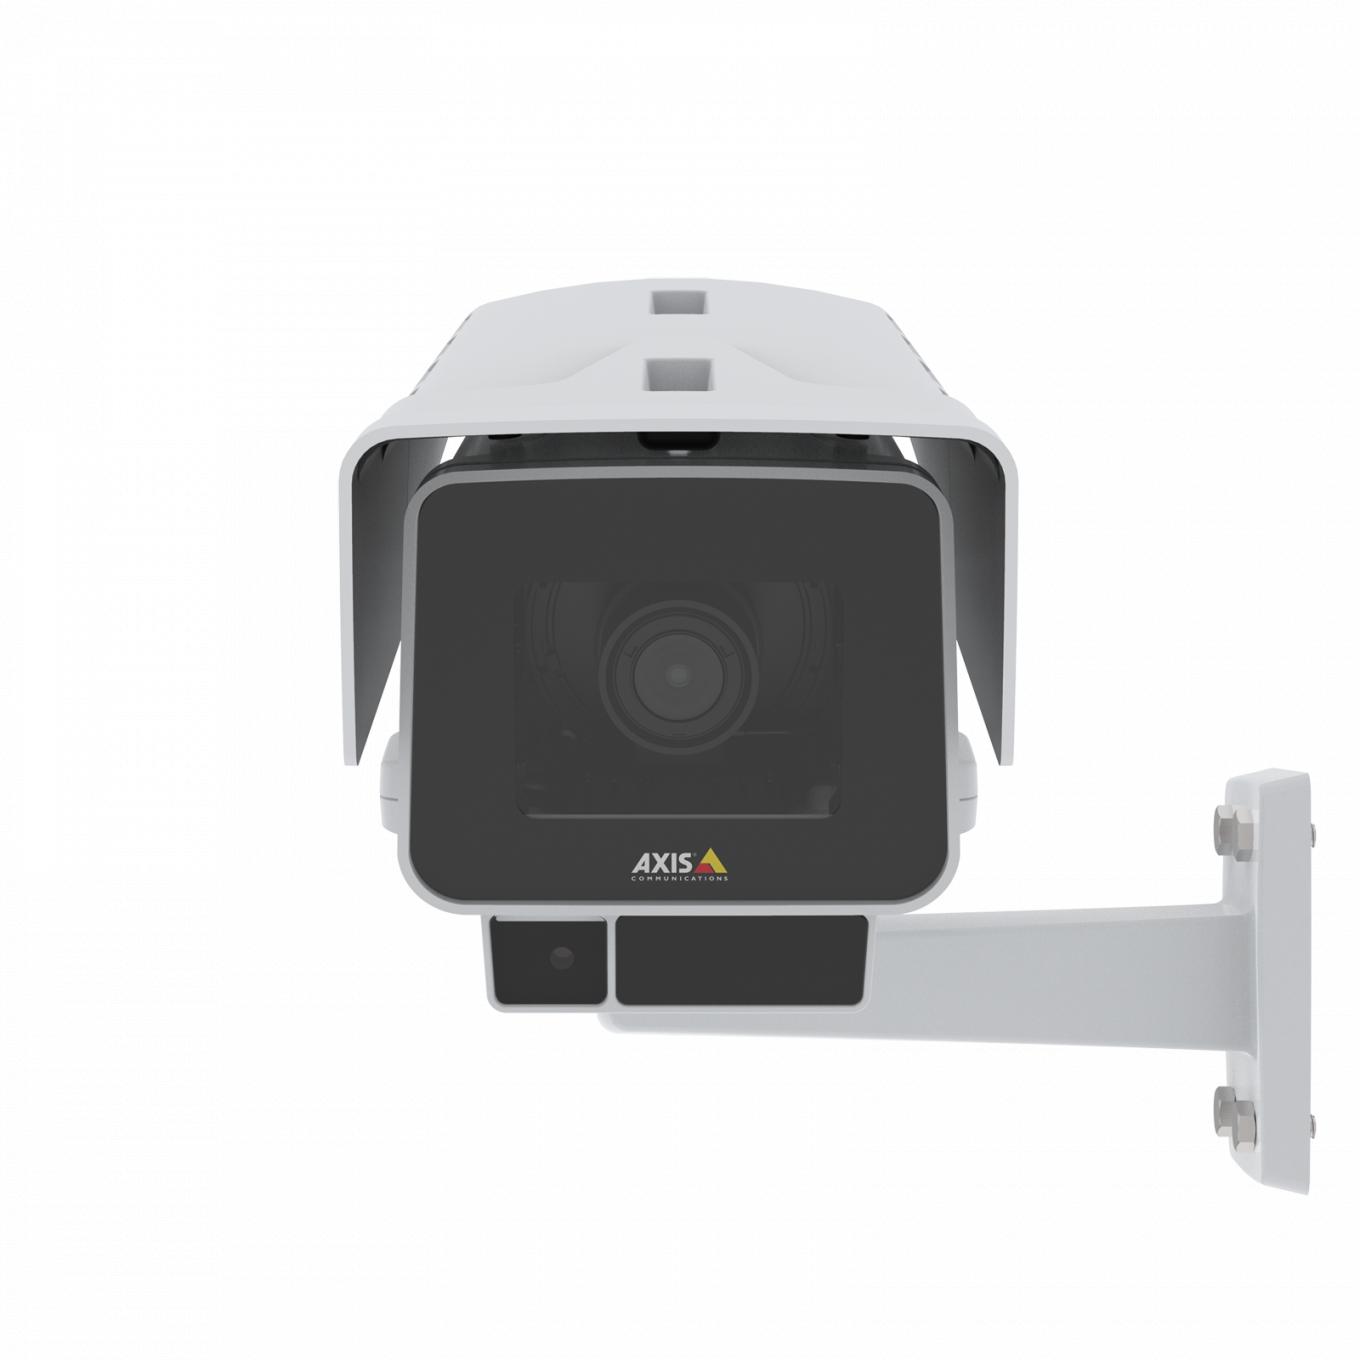 AXIS P1377-LE IP Camera는 OptimizedIR 및 Forensic WDR을 제공합니다. 이 제품은 전면에서 본 것입니다.